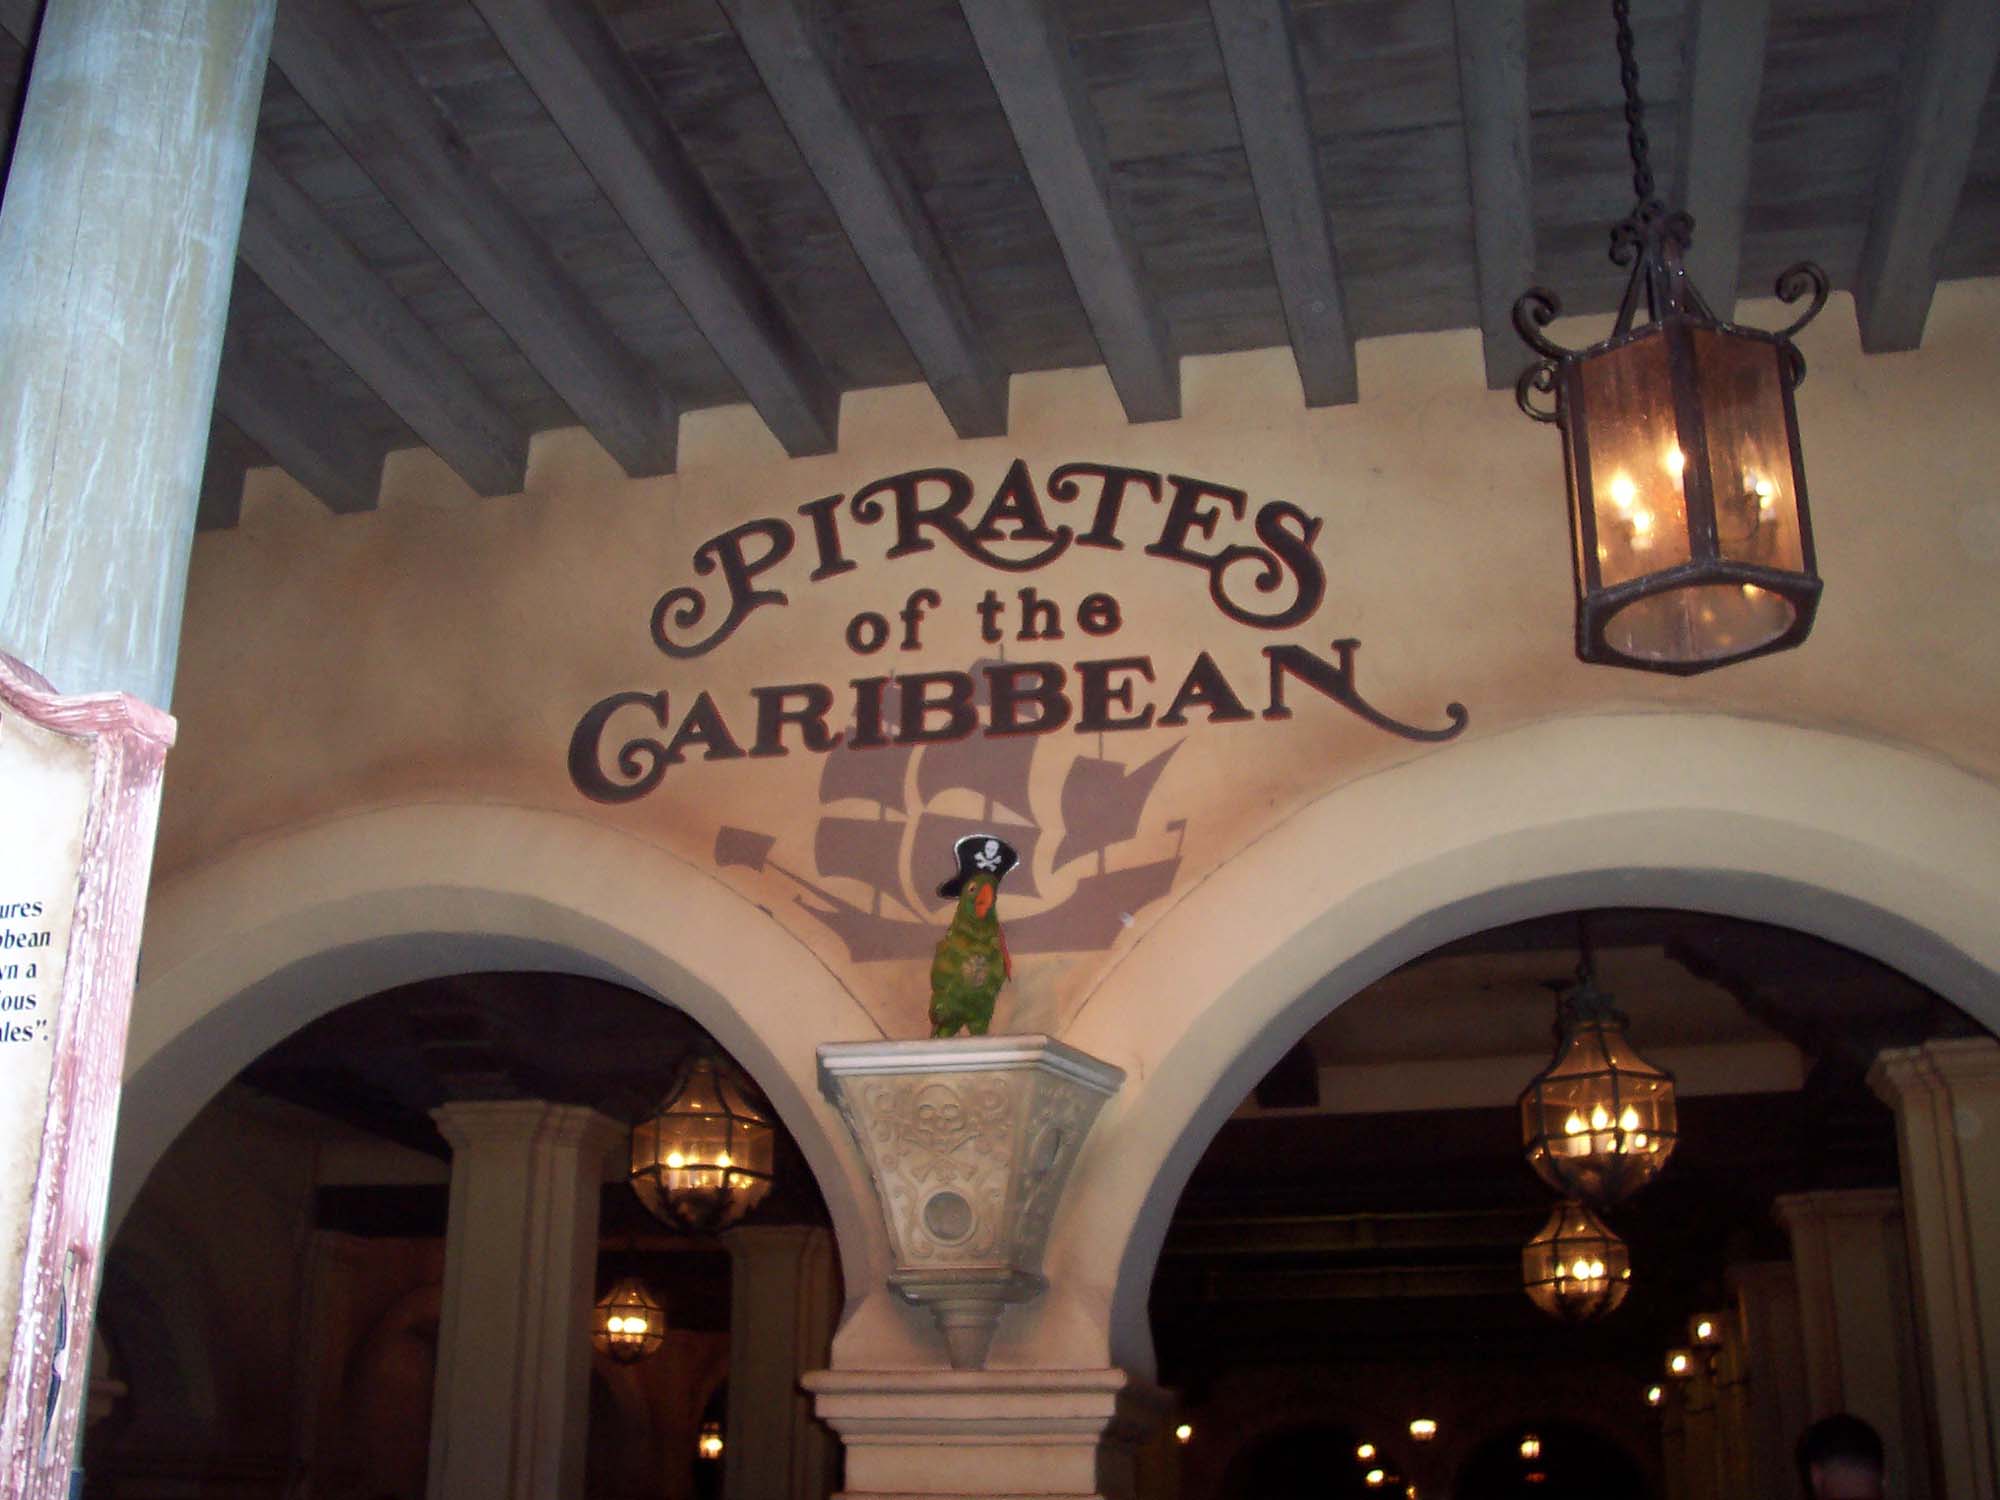 Adventureland - Pirates of the Caribbean entrance